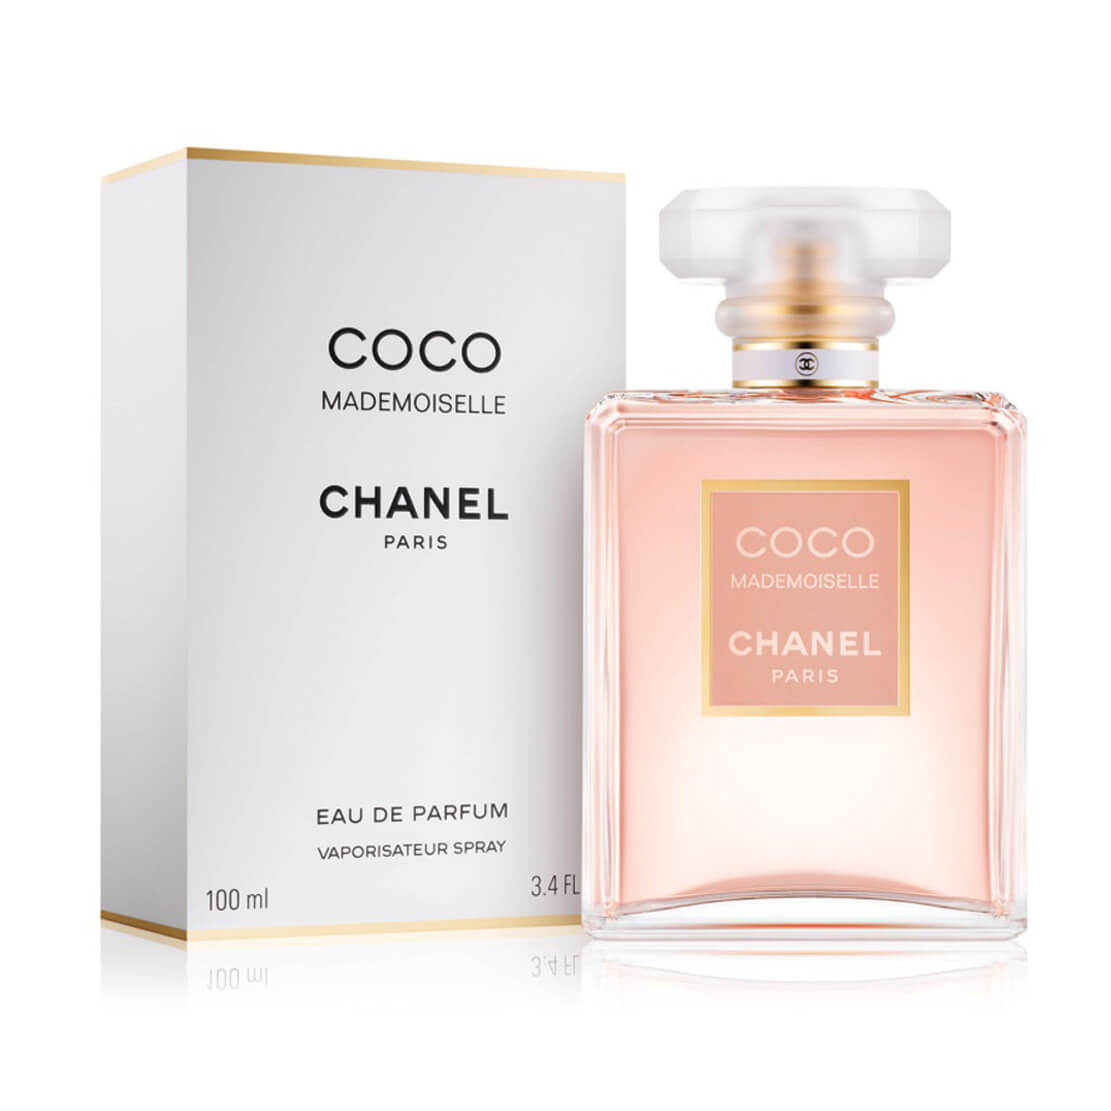 Chanel Coco Mademoiselle Eau De Parfum - 100ml